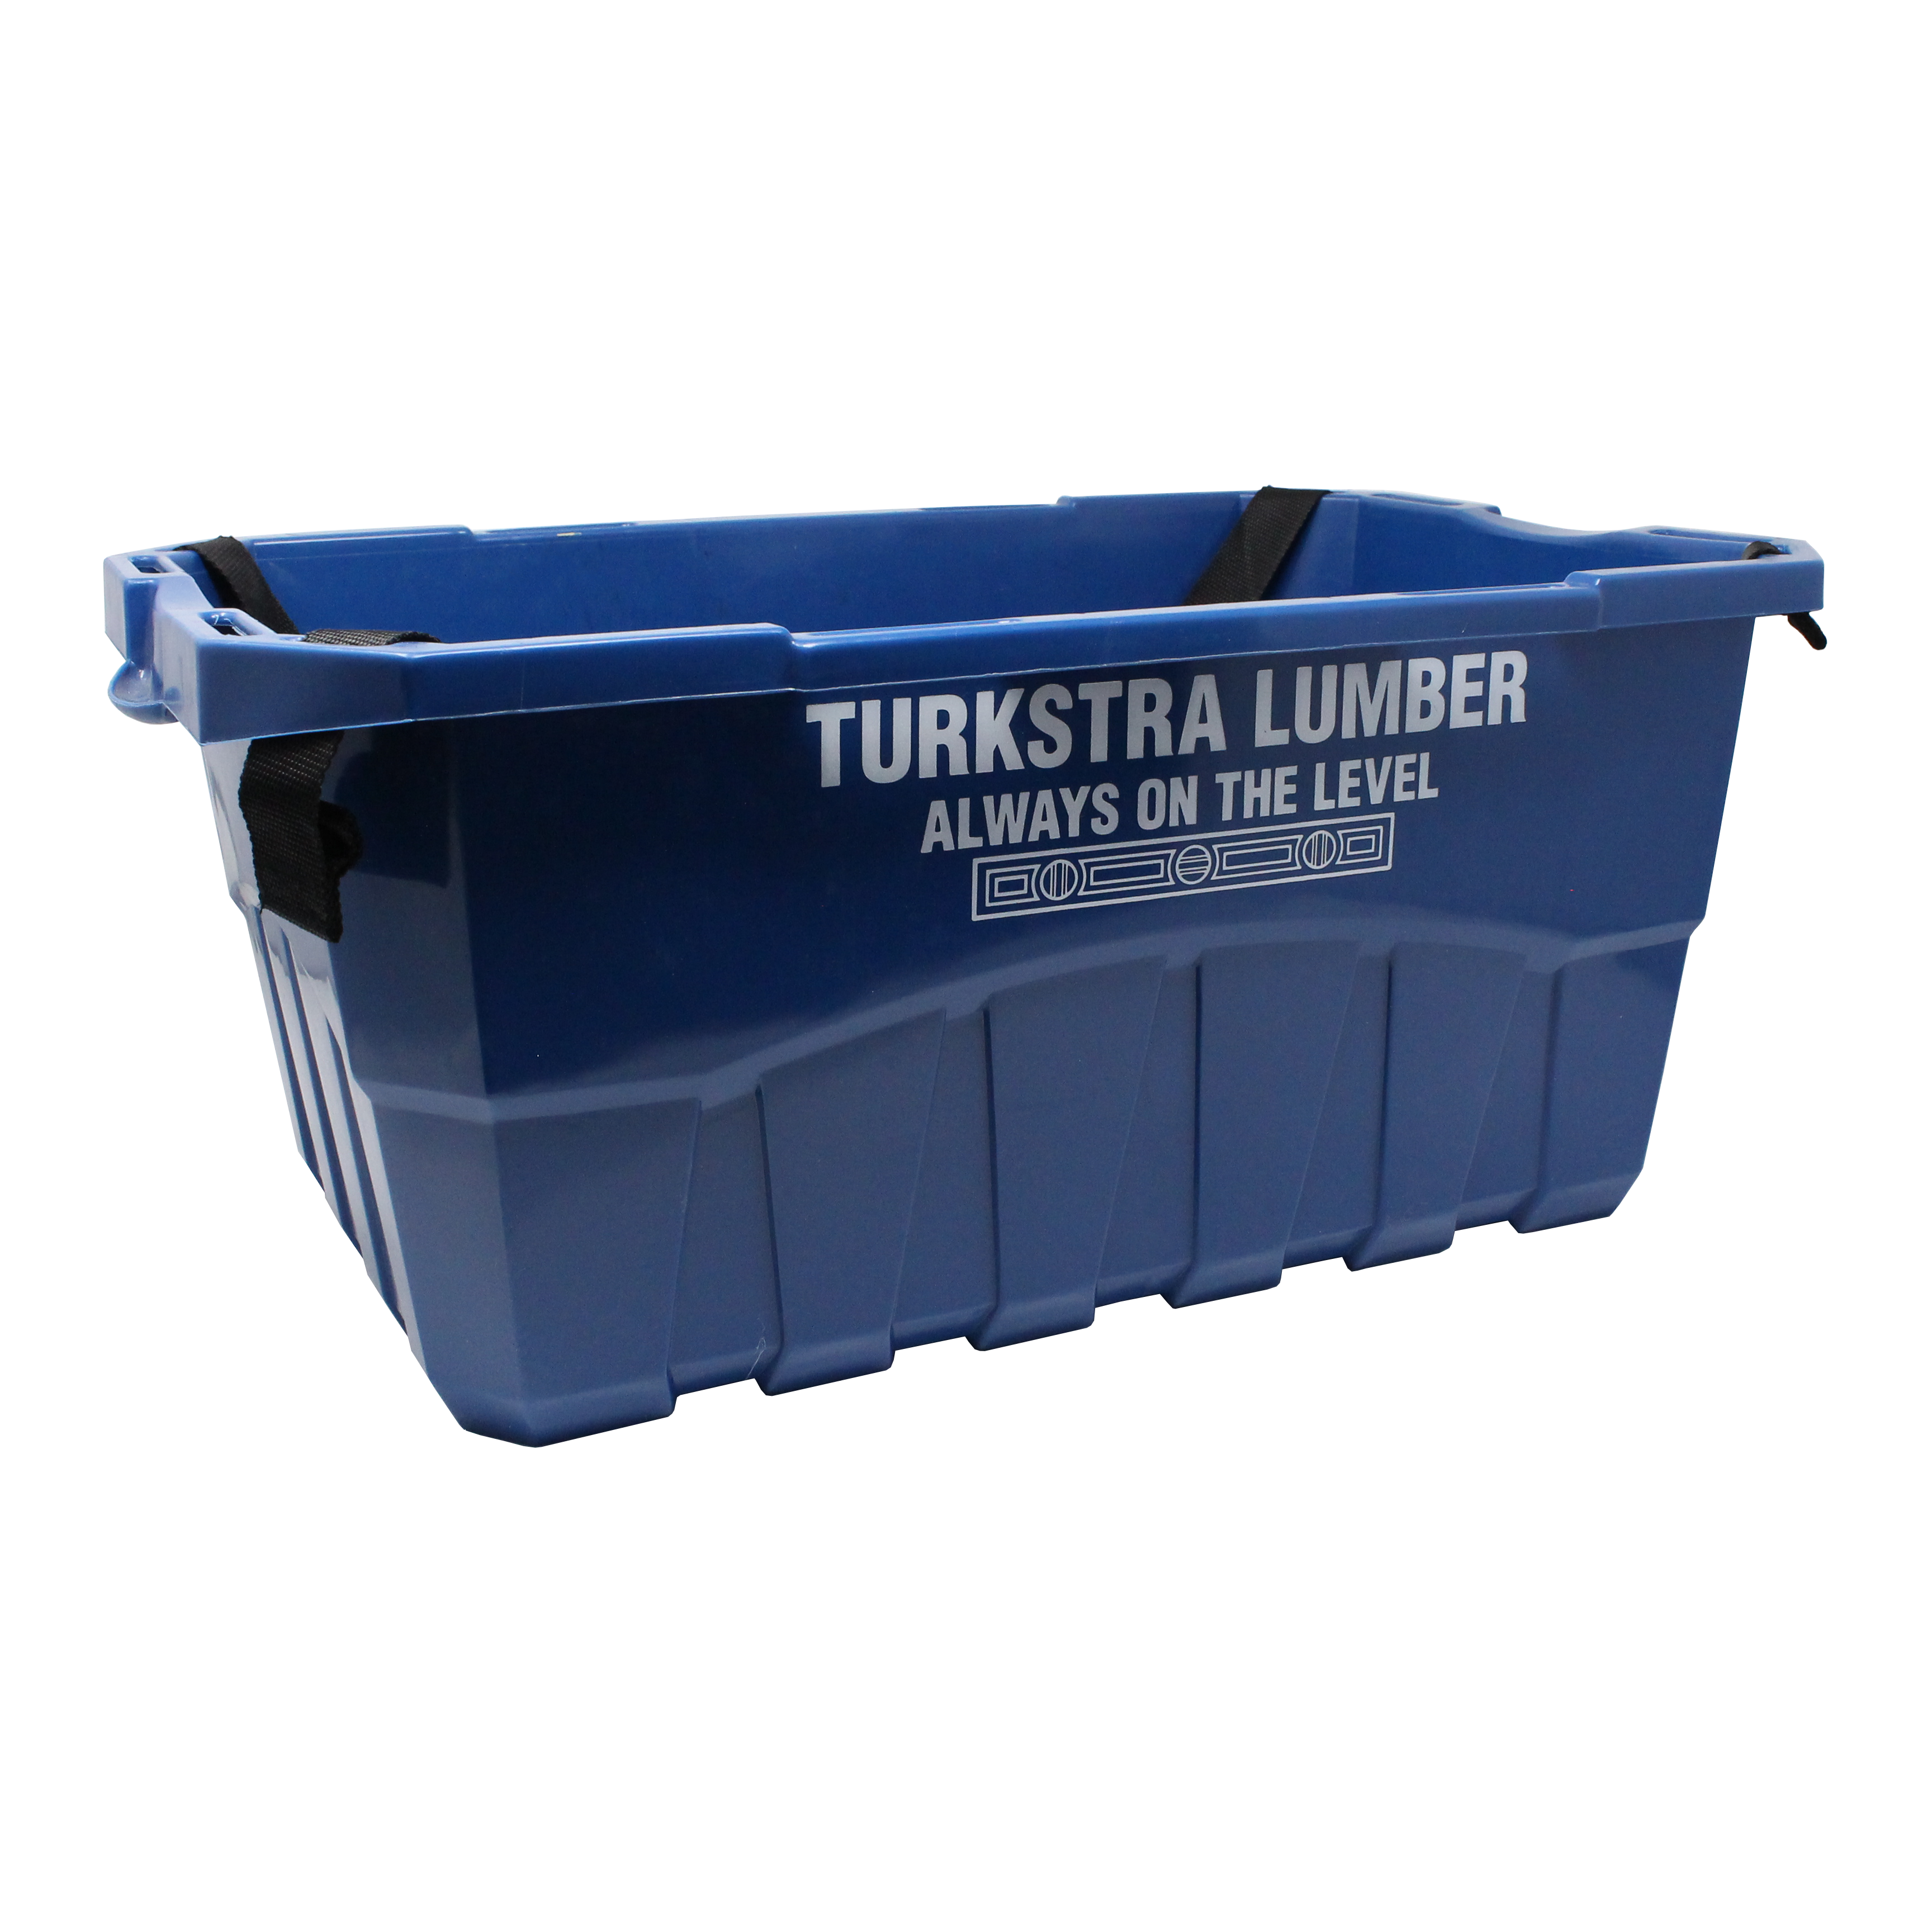 Turkstra Lumber Build-It-Better Blue Tote